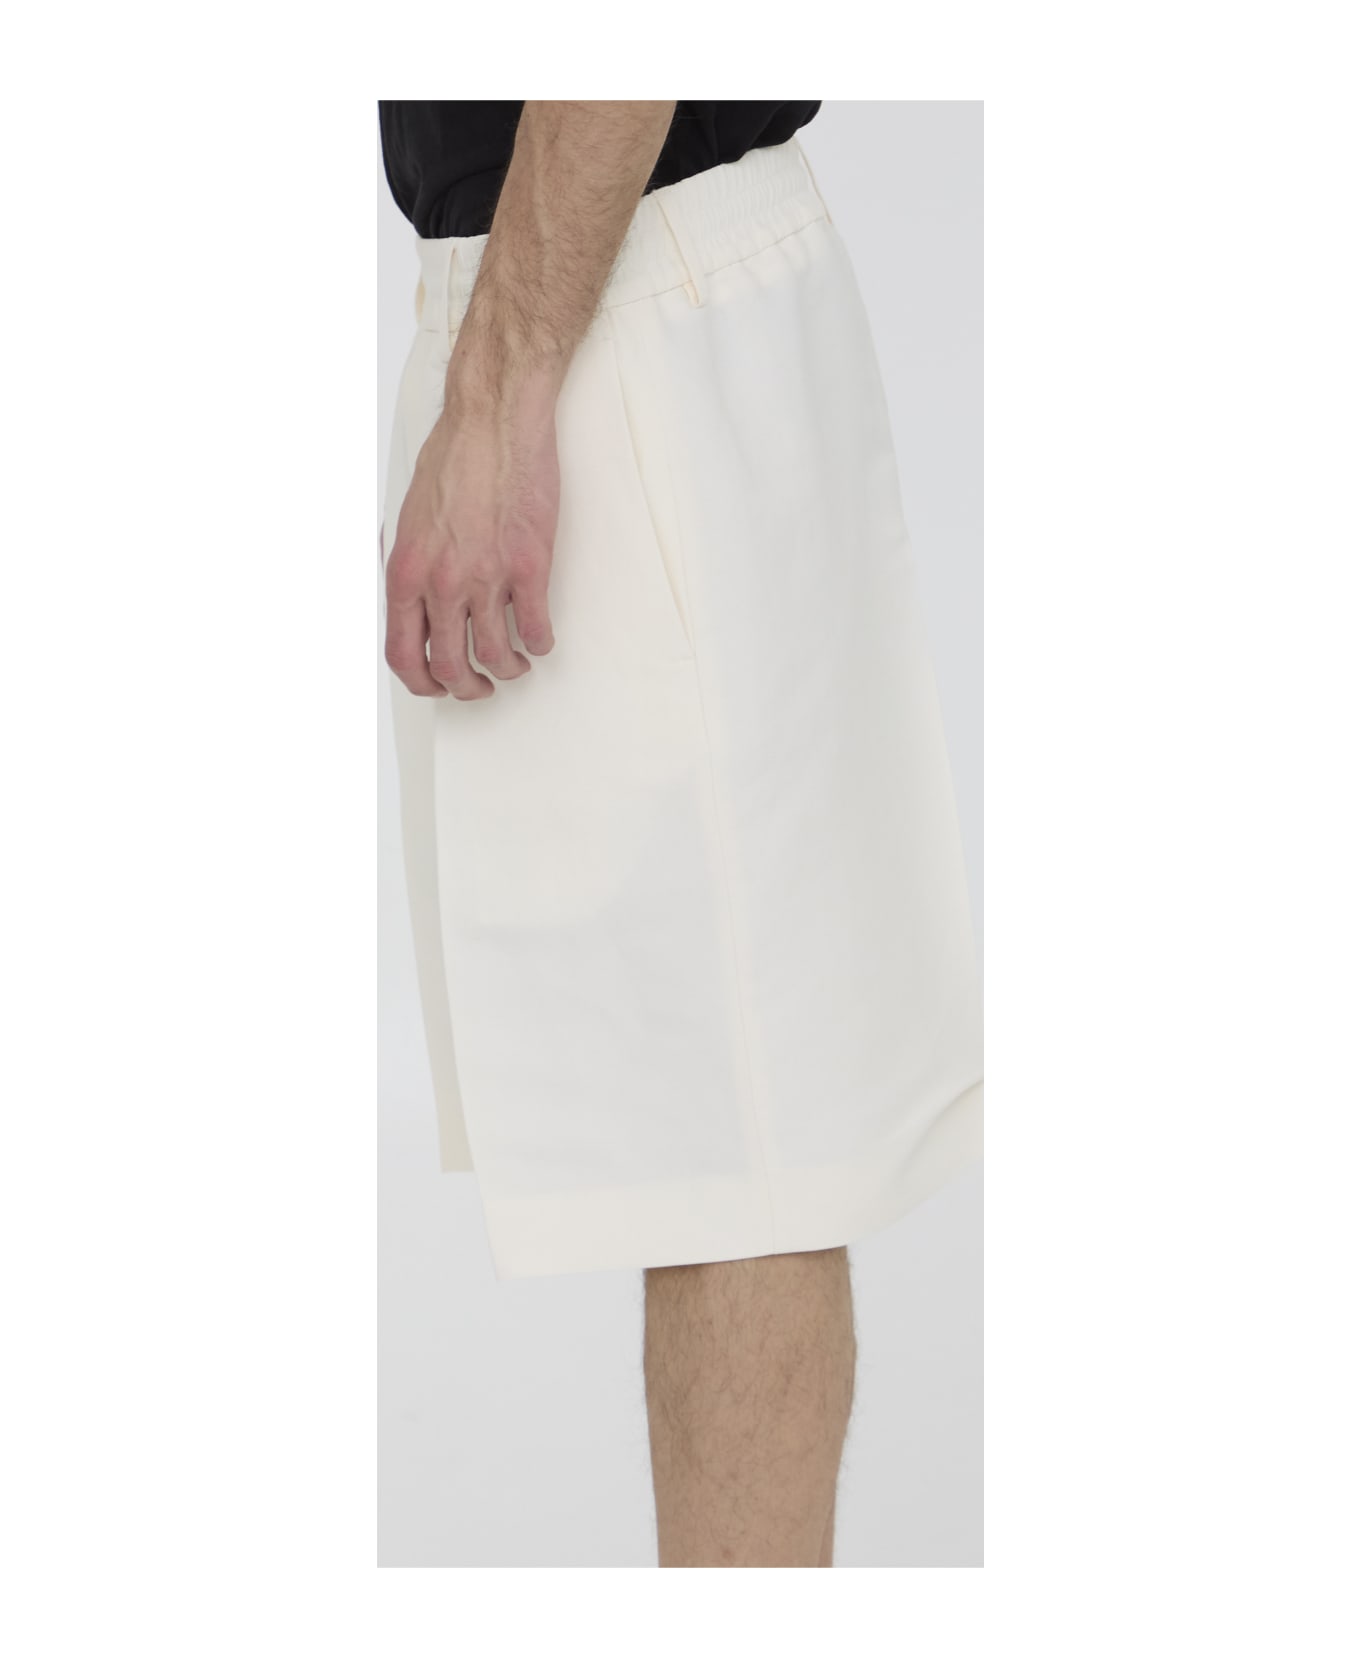 Burberry Tailored Bermuda Shorts - Pearl